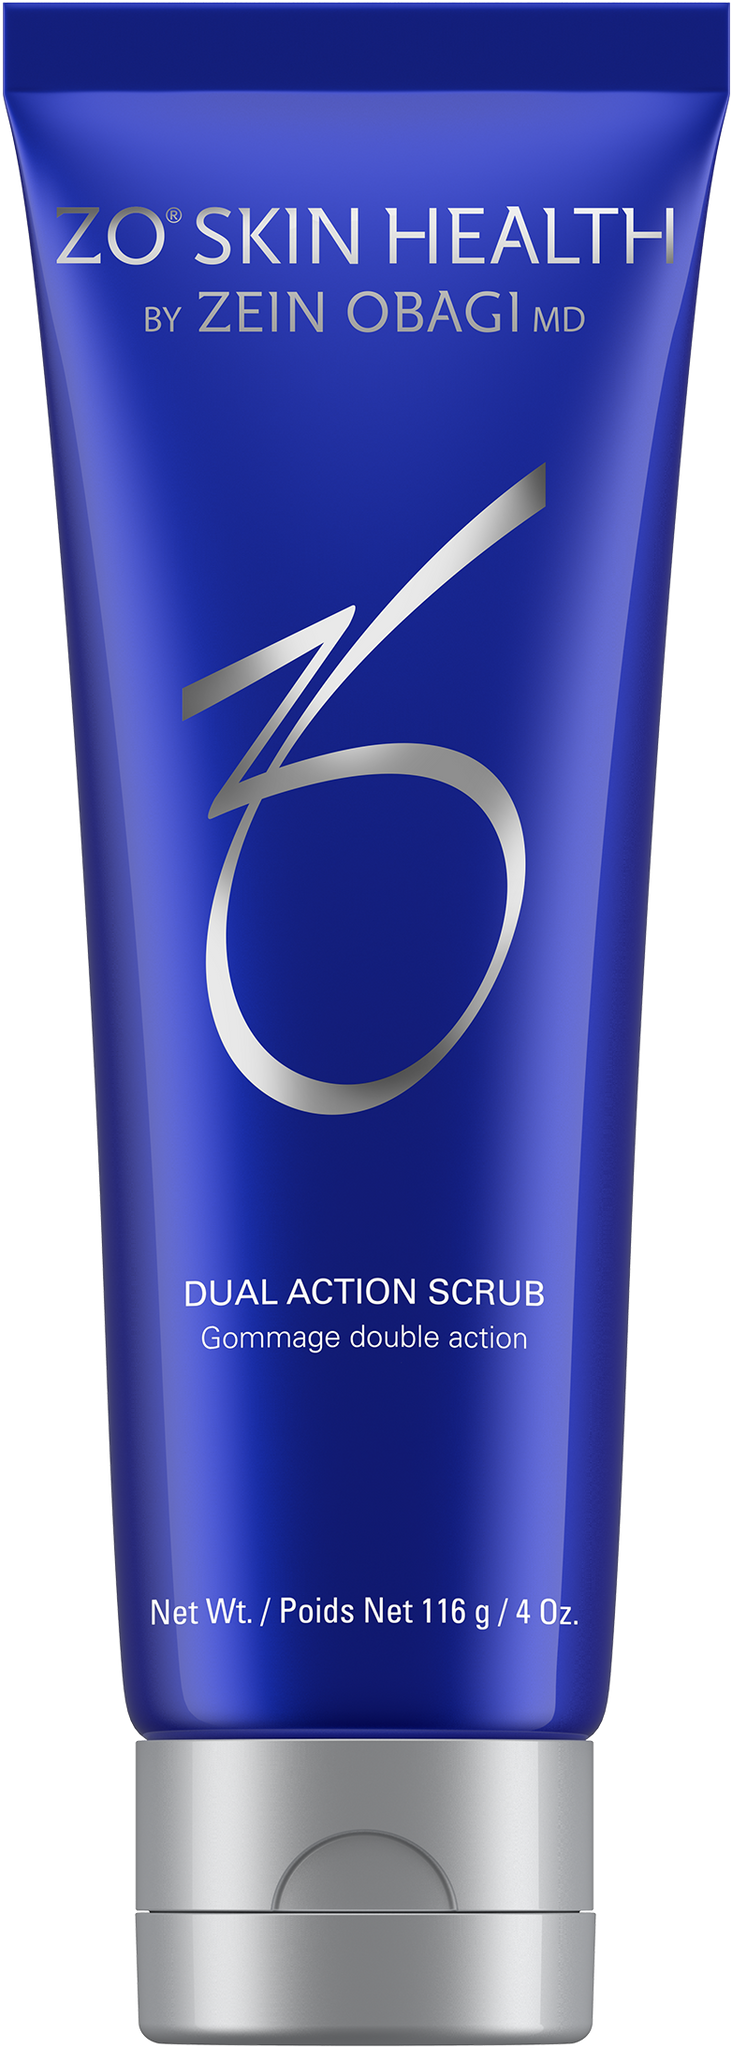 Zo Skin Health - Dual Action Scrub (formerly VitascrubTM)